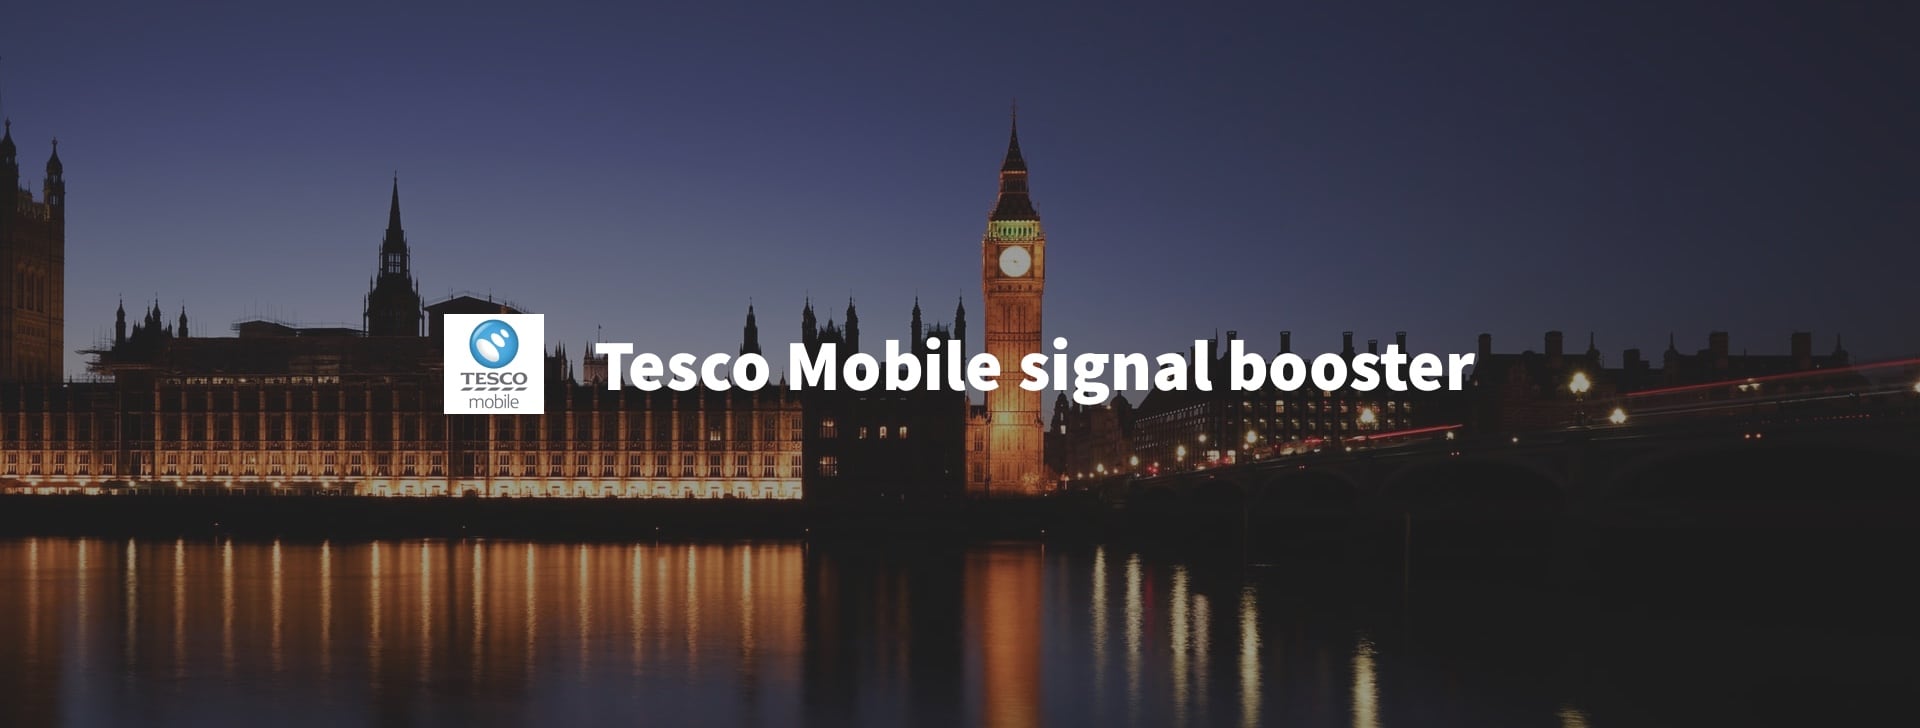 Tesco Mobile phone signal booster